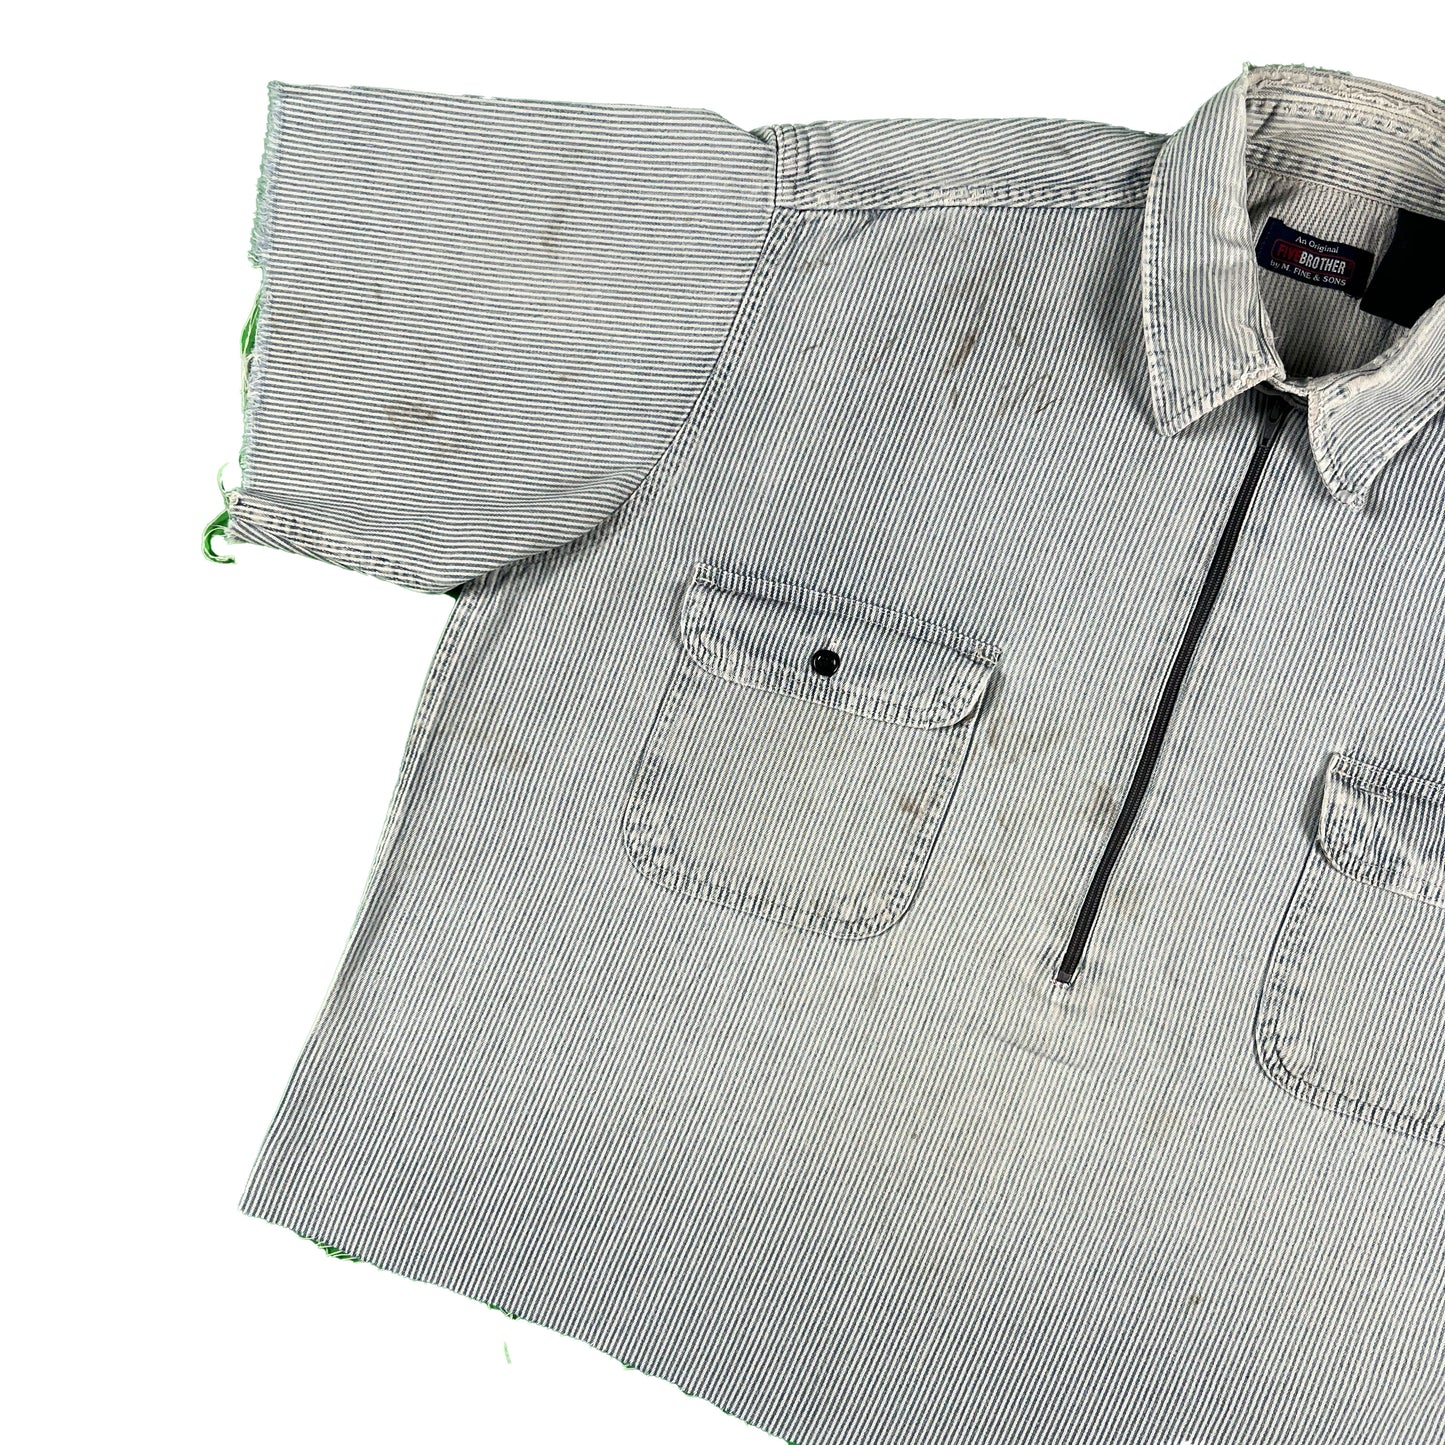 90s Chopped Boxy Hickory Striped Work Shirt- XL